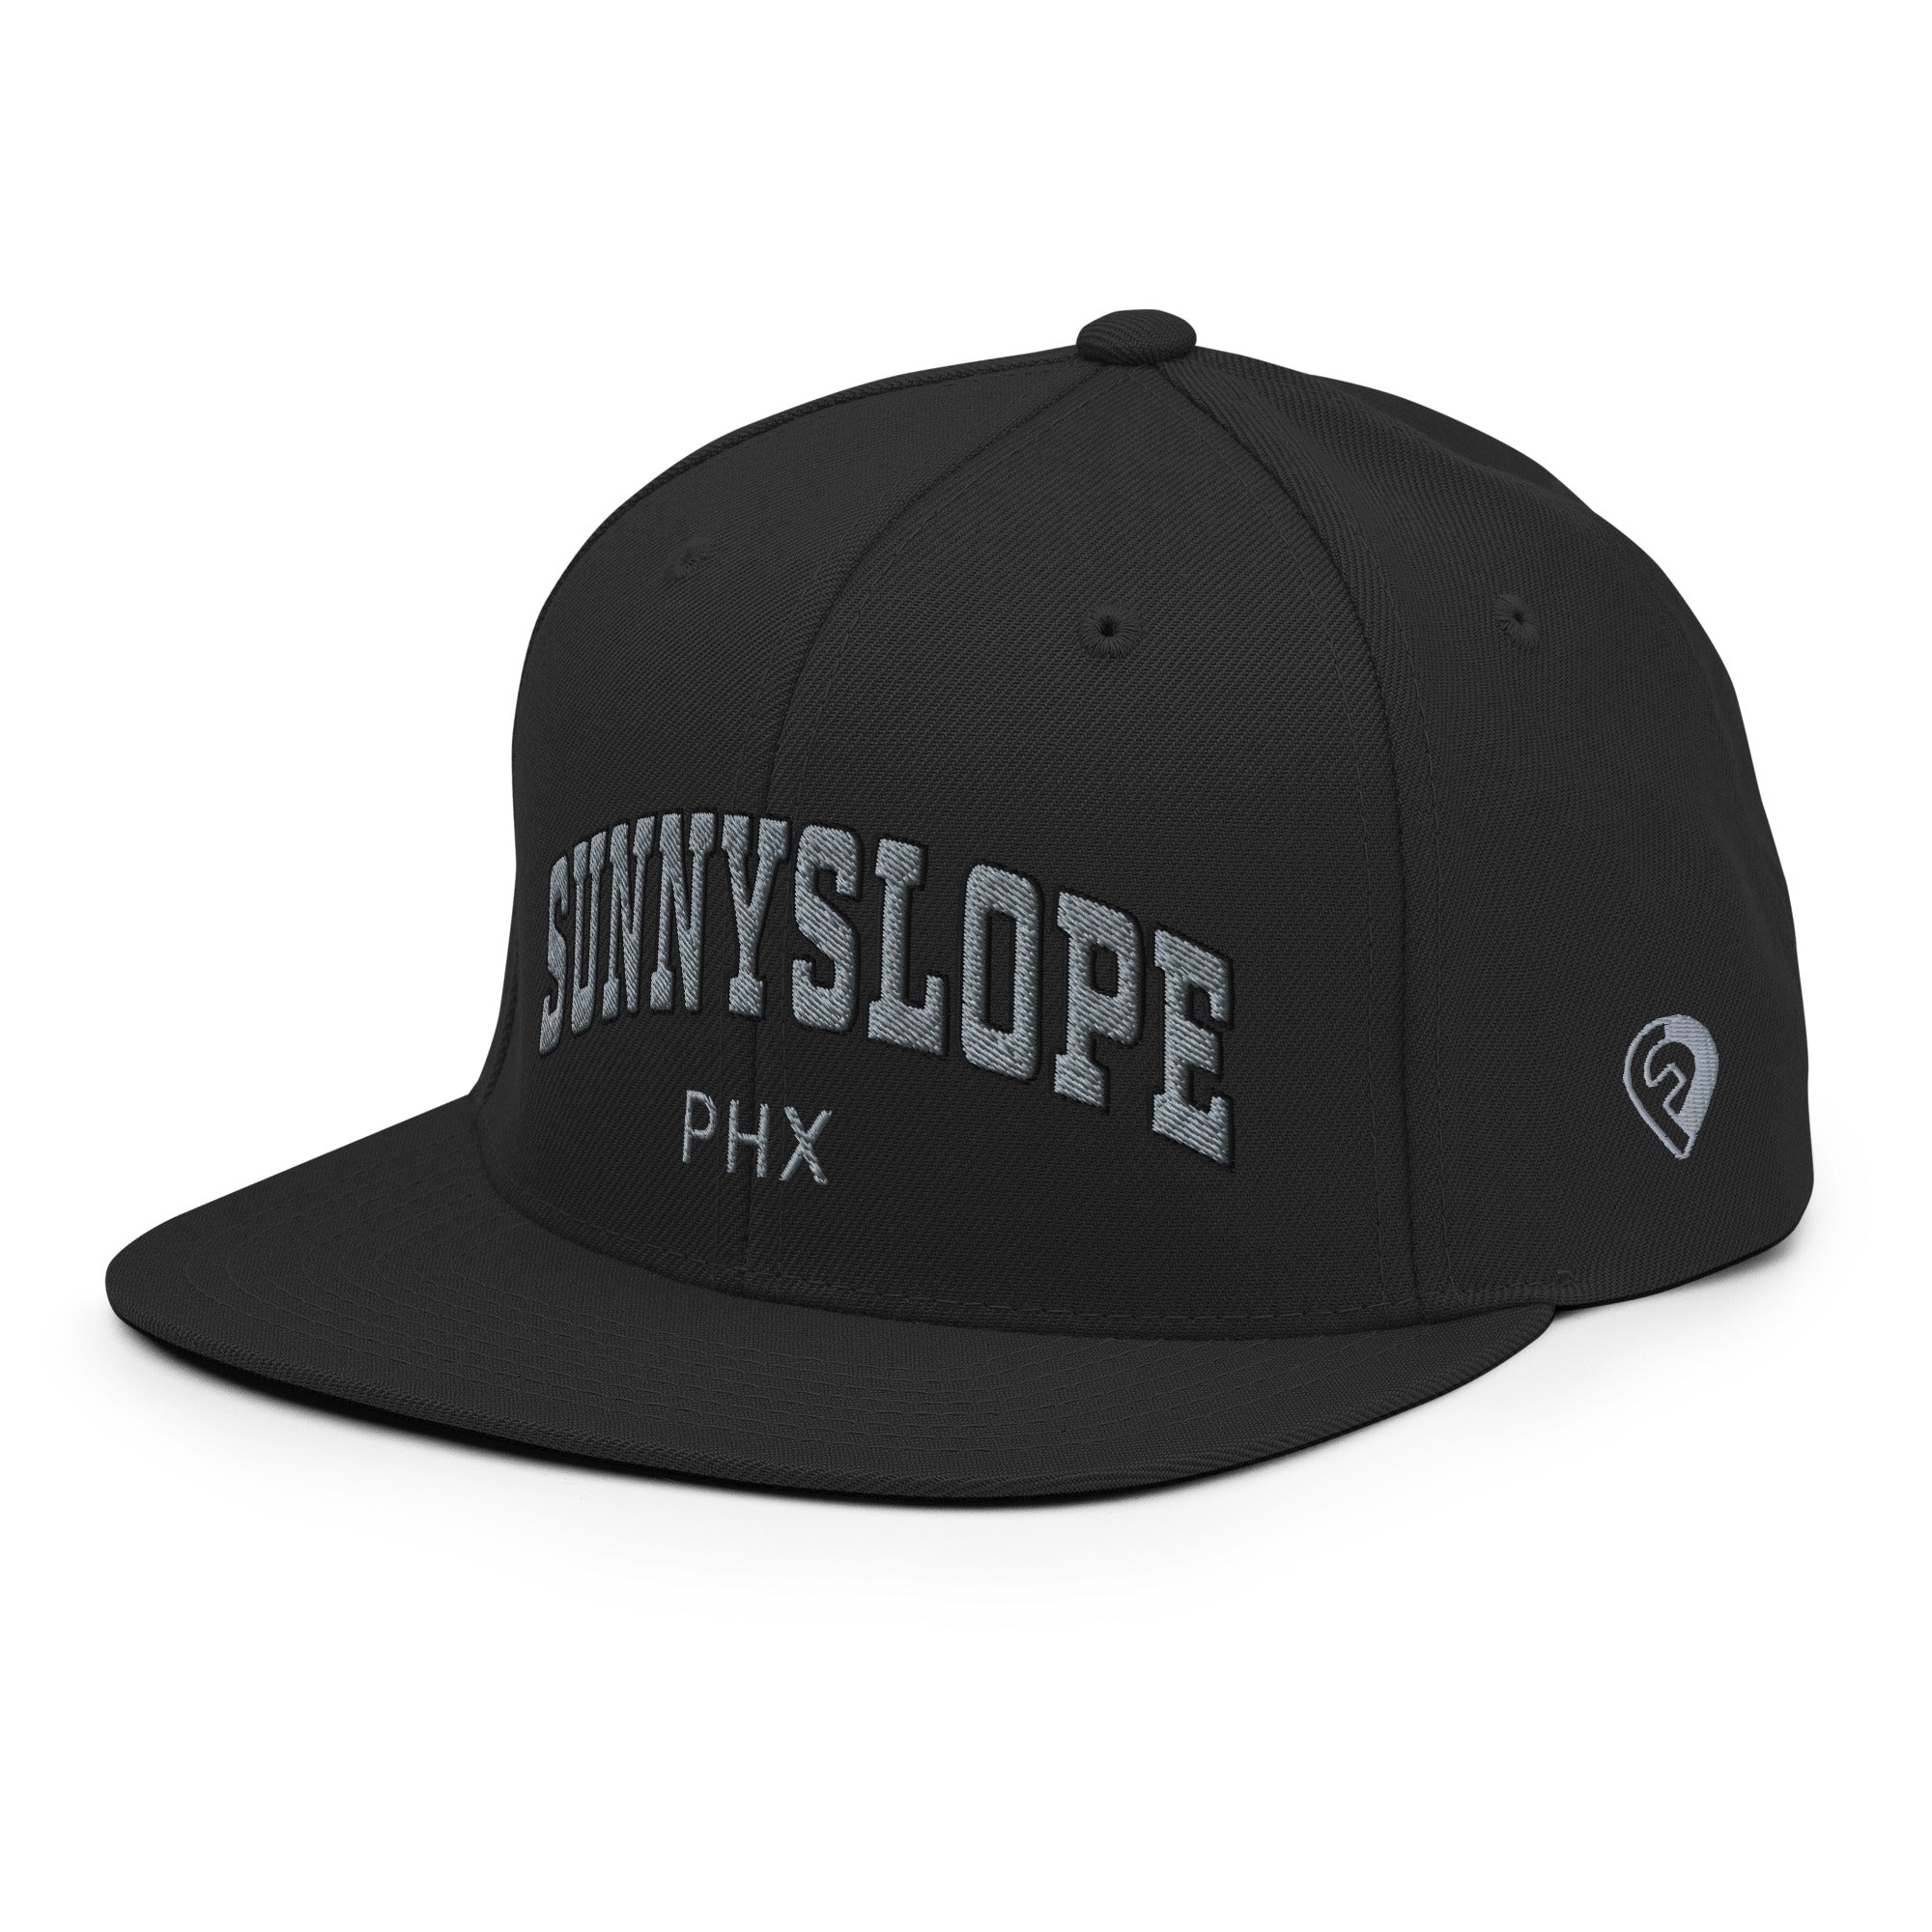 Bold Snapback Hat - Sunnyslope | Phoenix, AZ